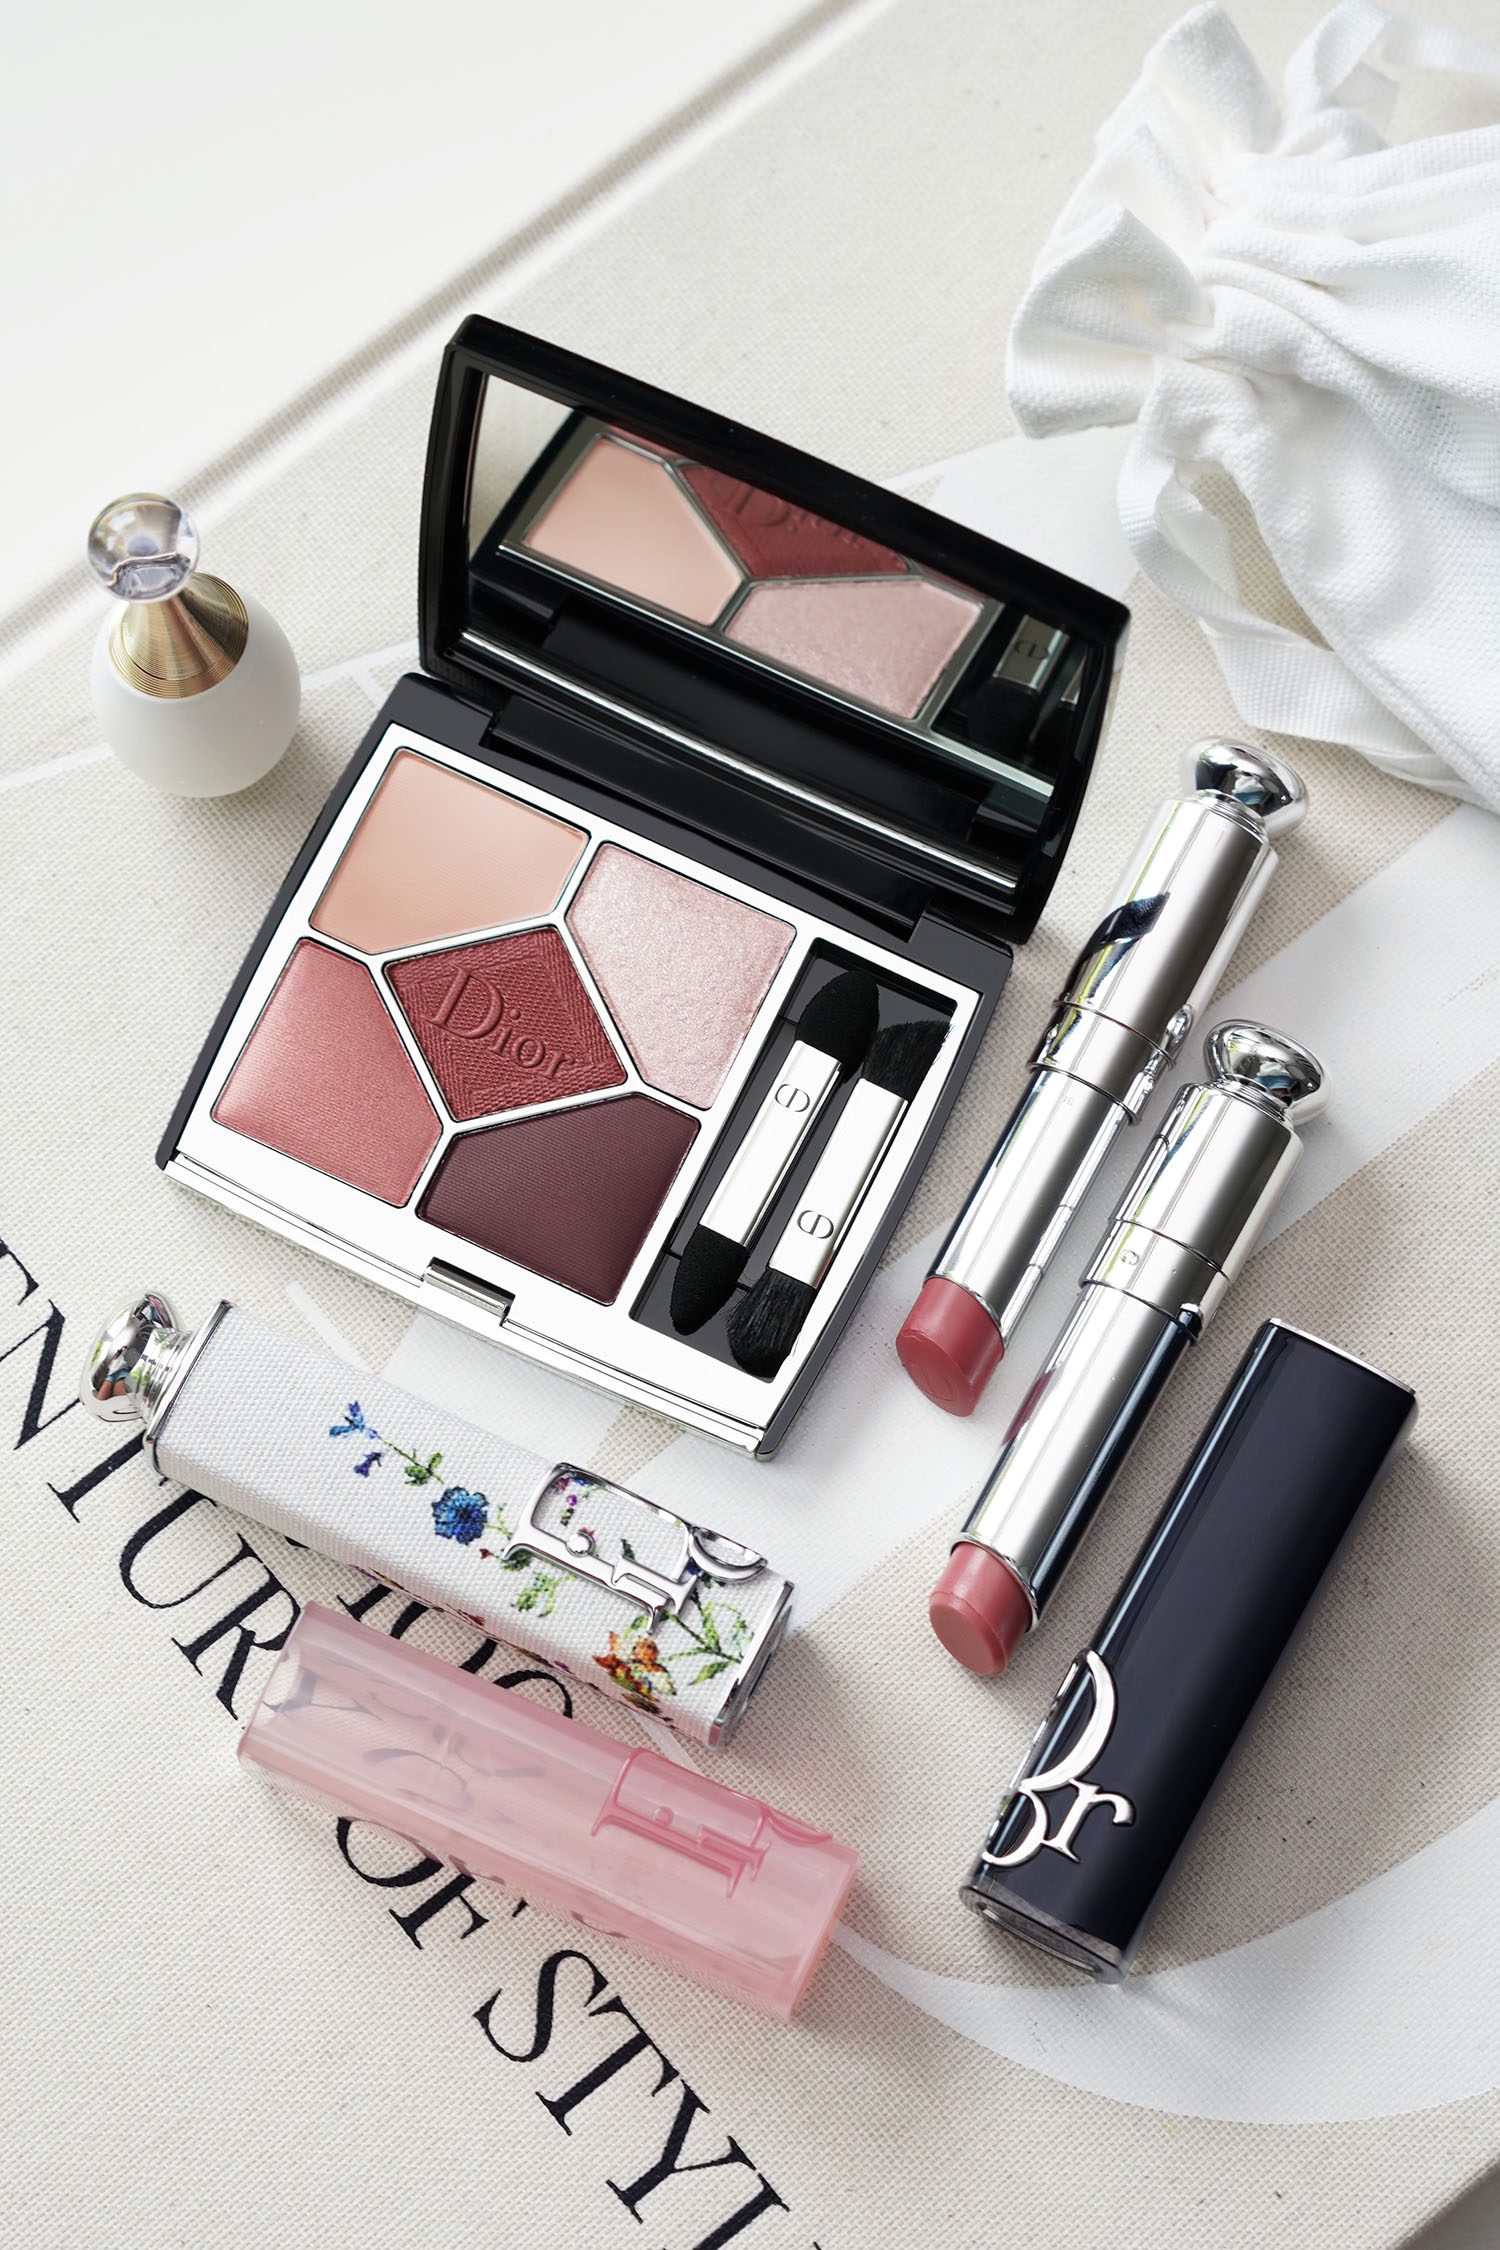 Dior Makeup Favorites - The Beauty Look Book